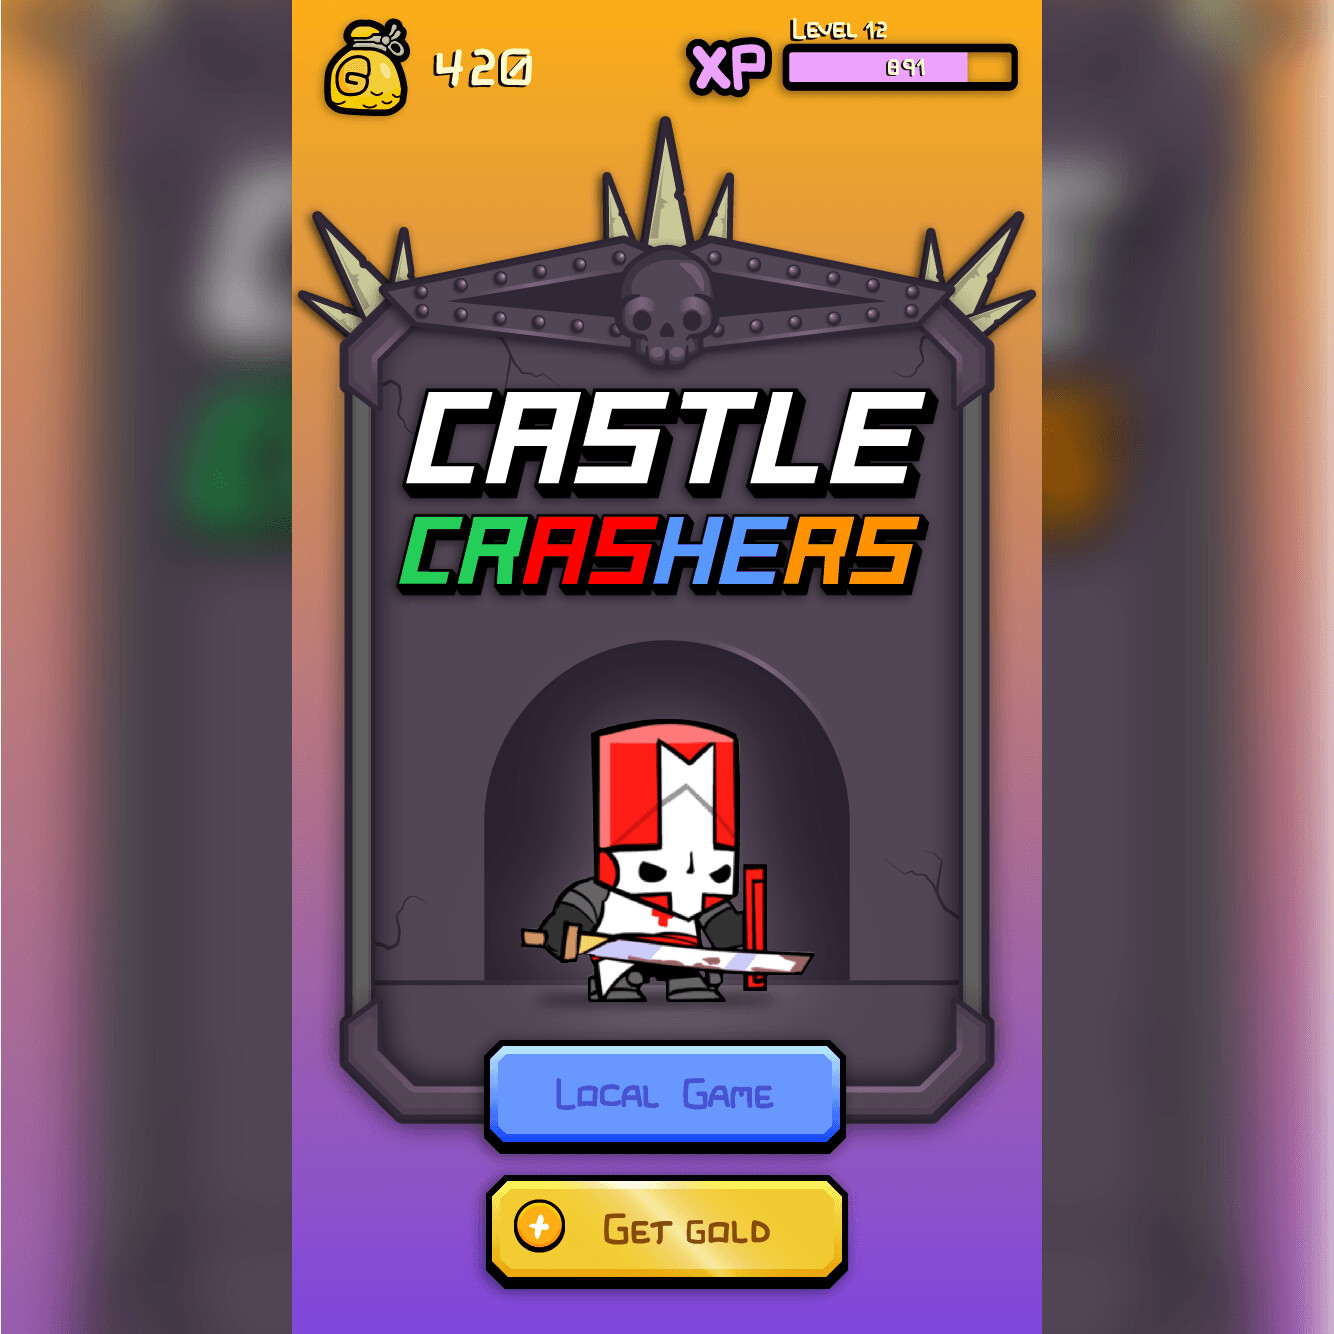 Castle Crashers mobile edition 